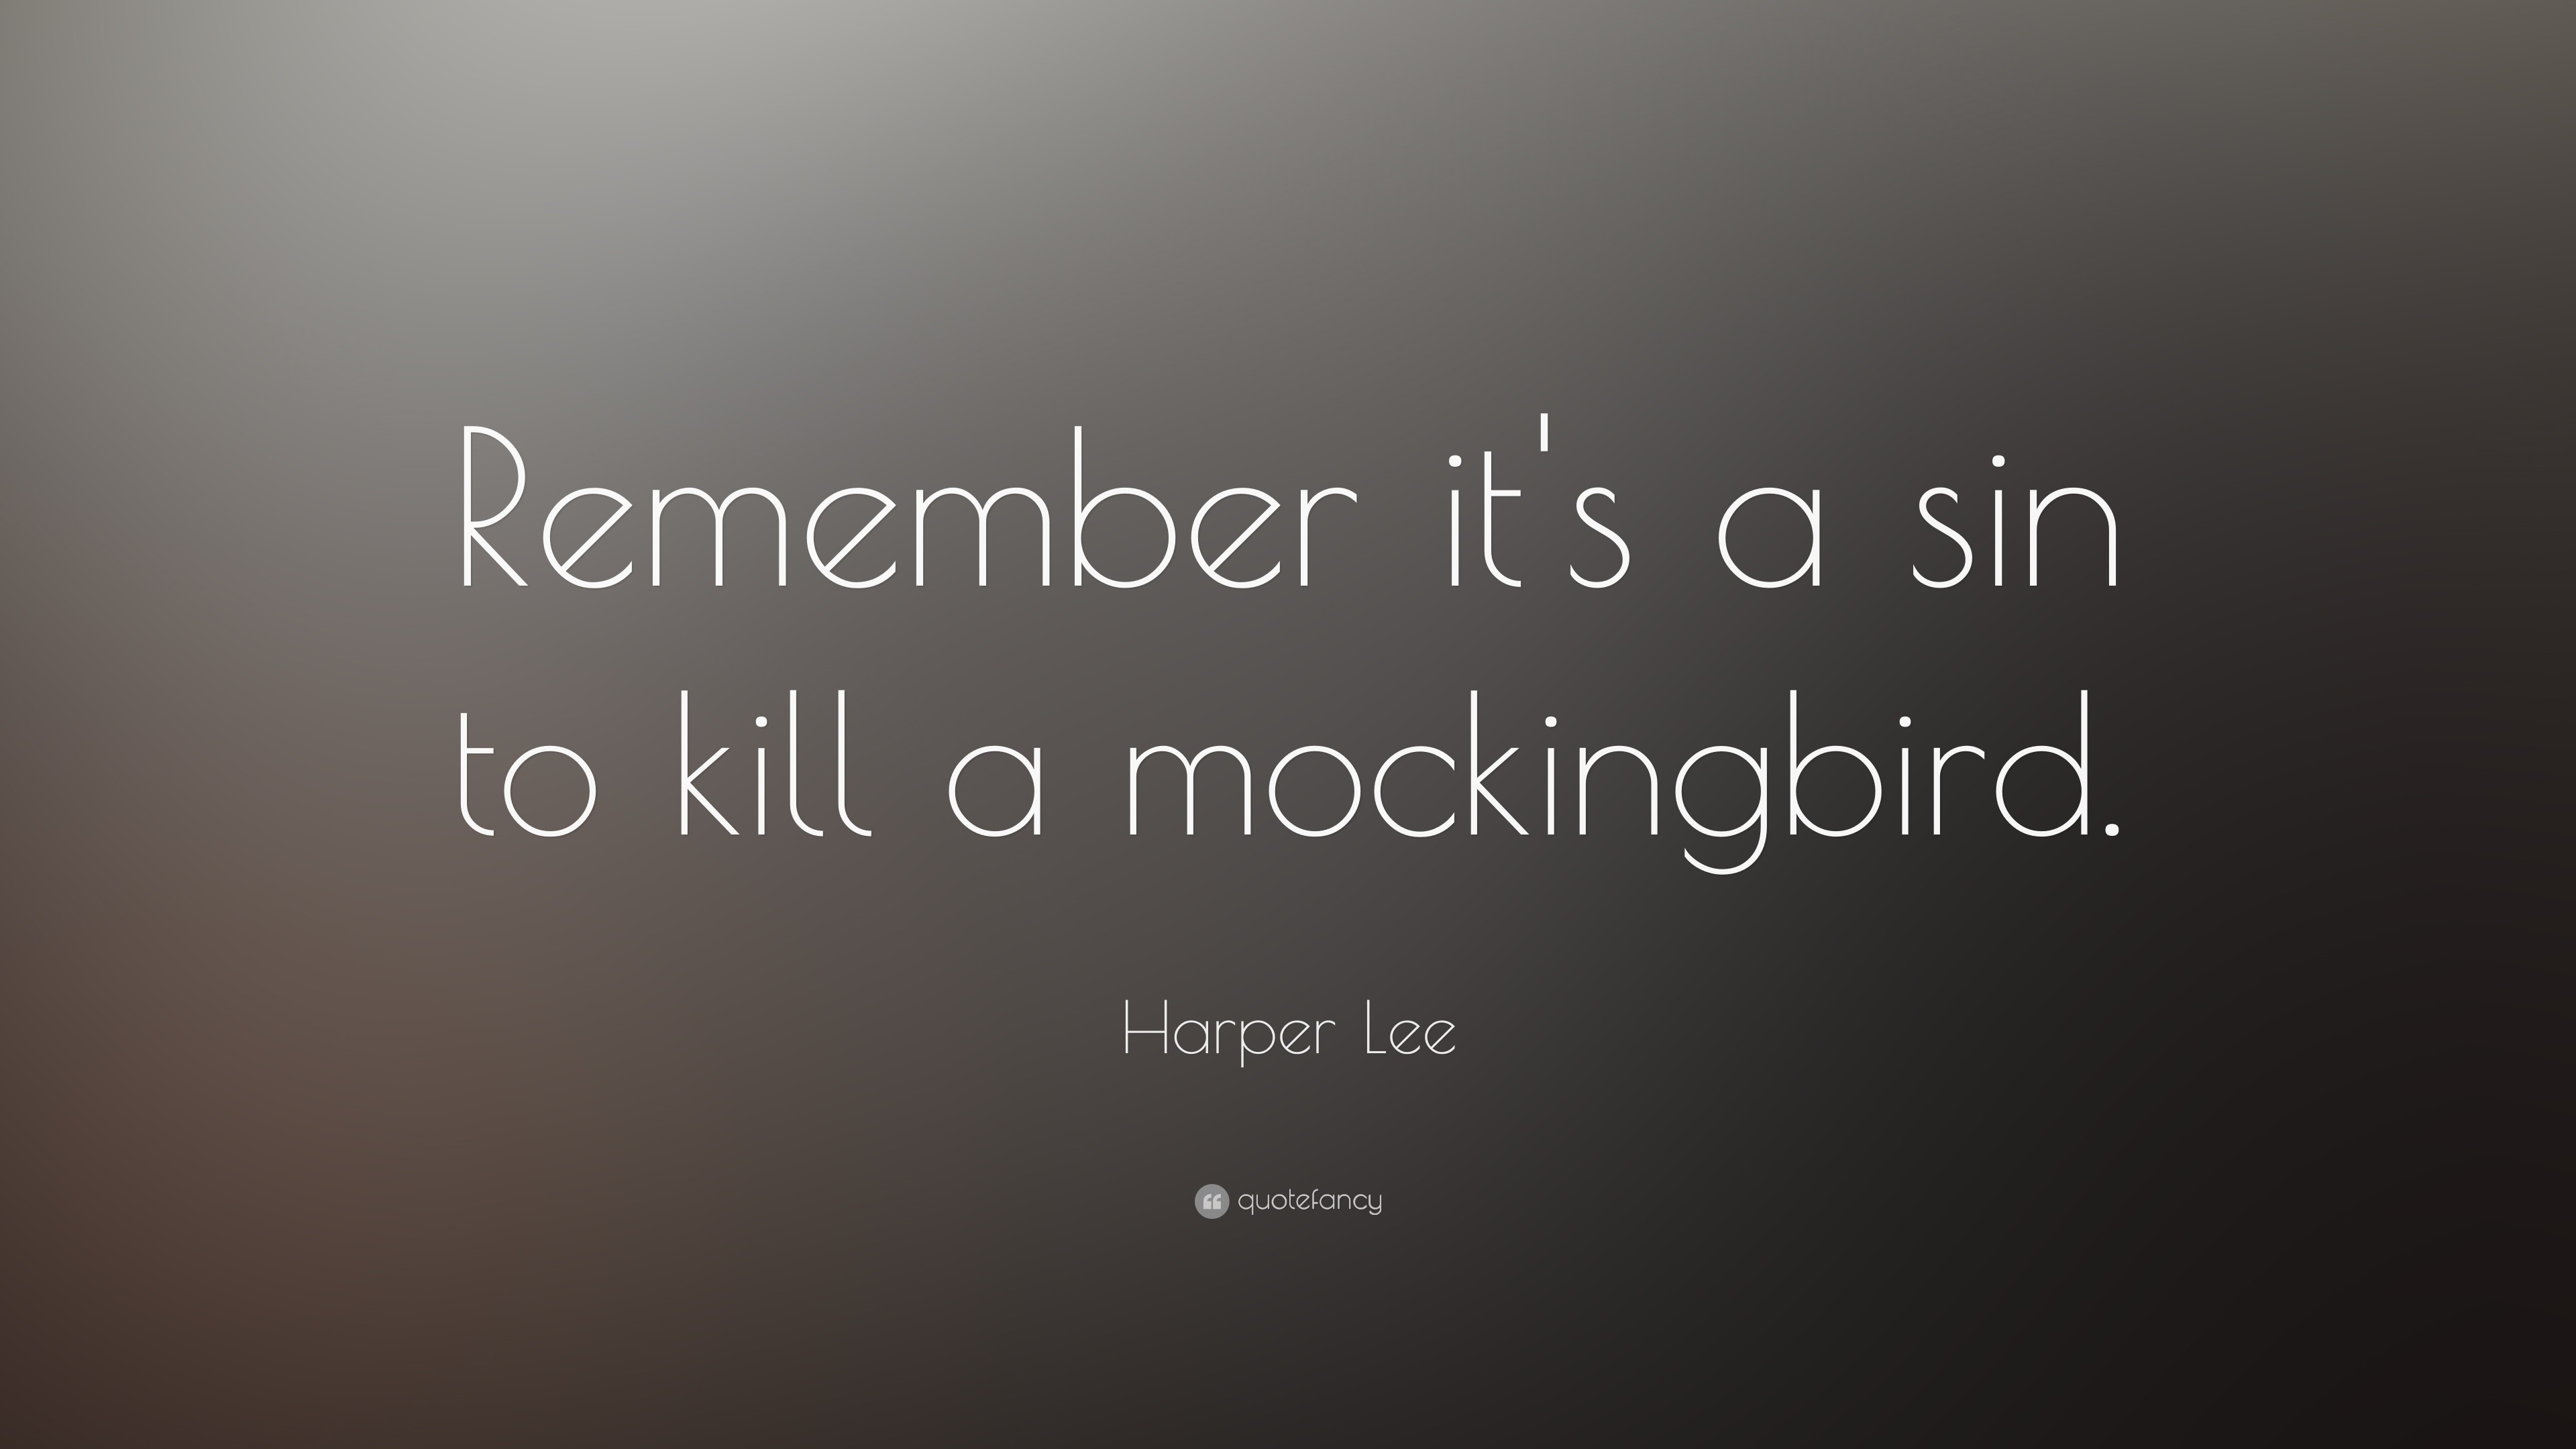 3840x2160 Harper Lee Quote: “Remember it's a sin to kill a mockingbird.”